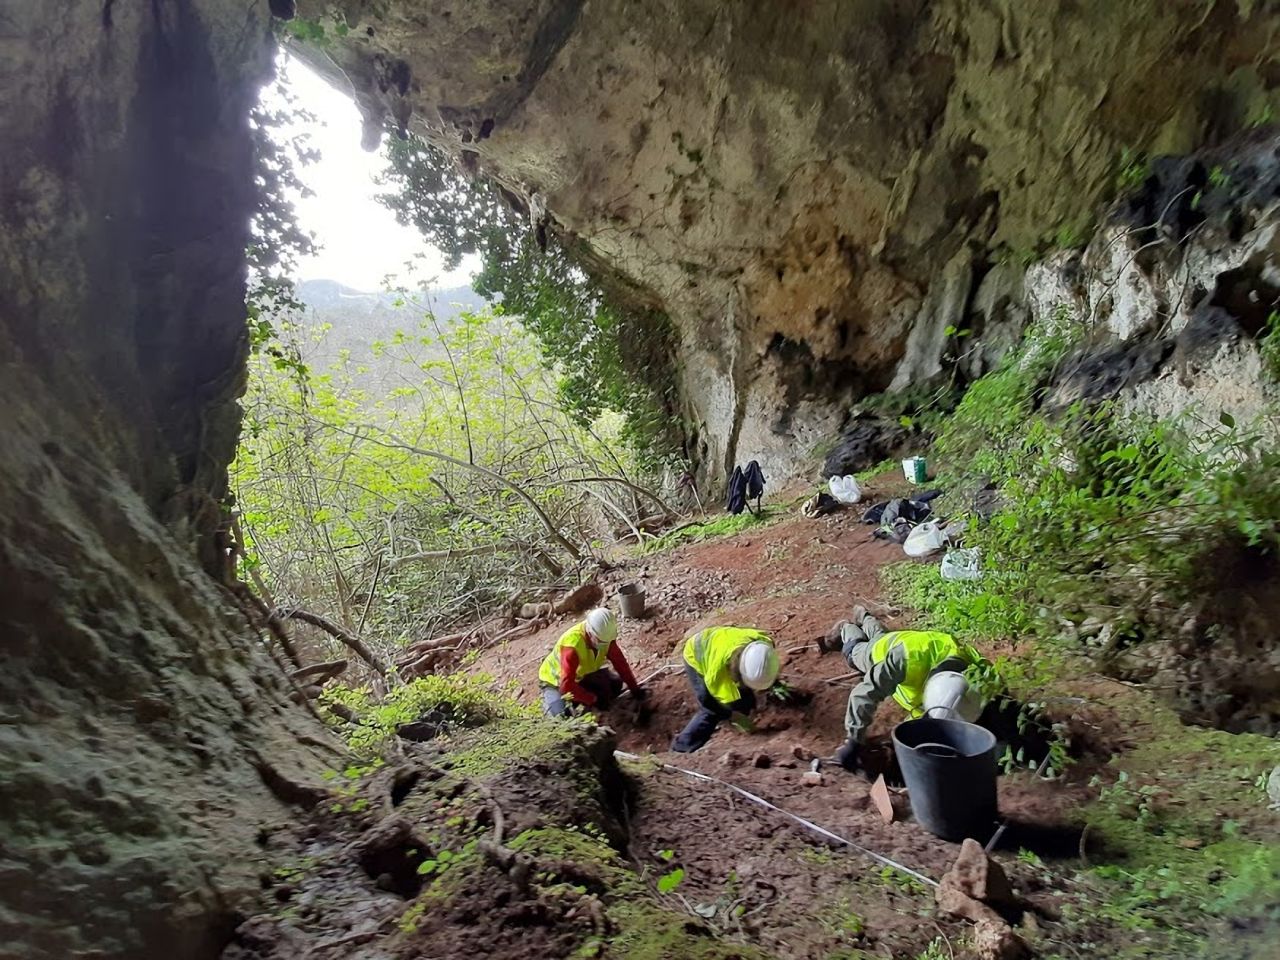 The cave is in the Asturias region of northwestern Spain.